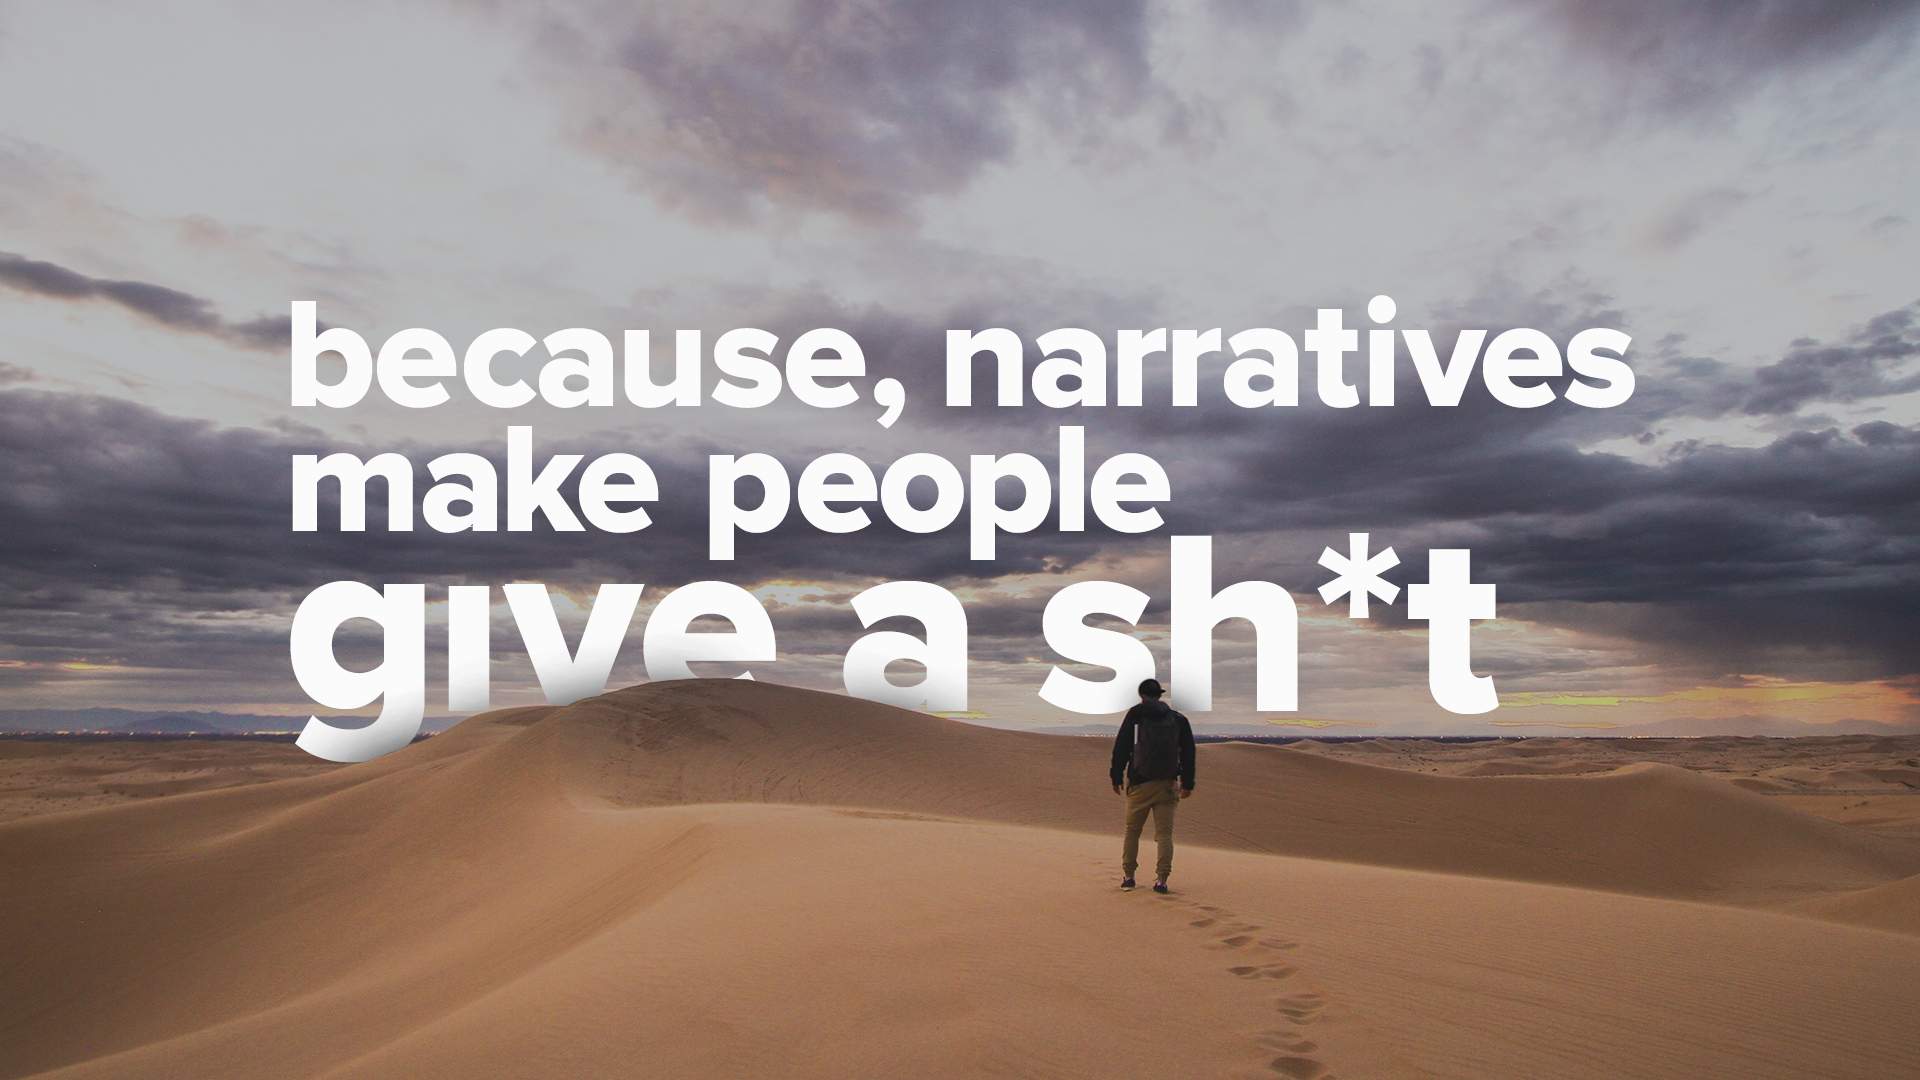 Narratives make people give a sh*t